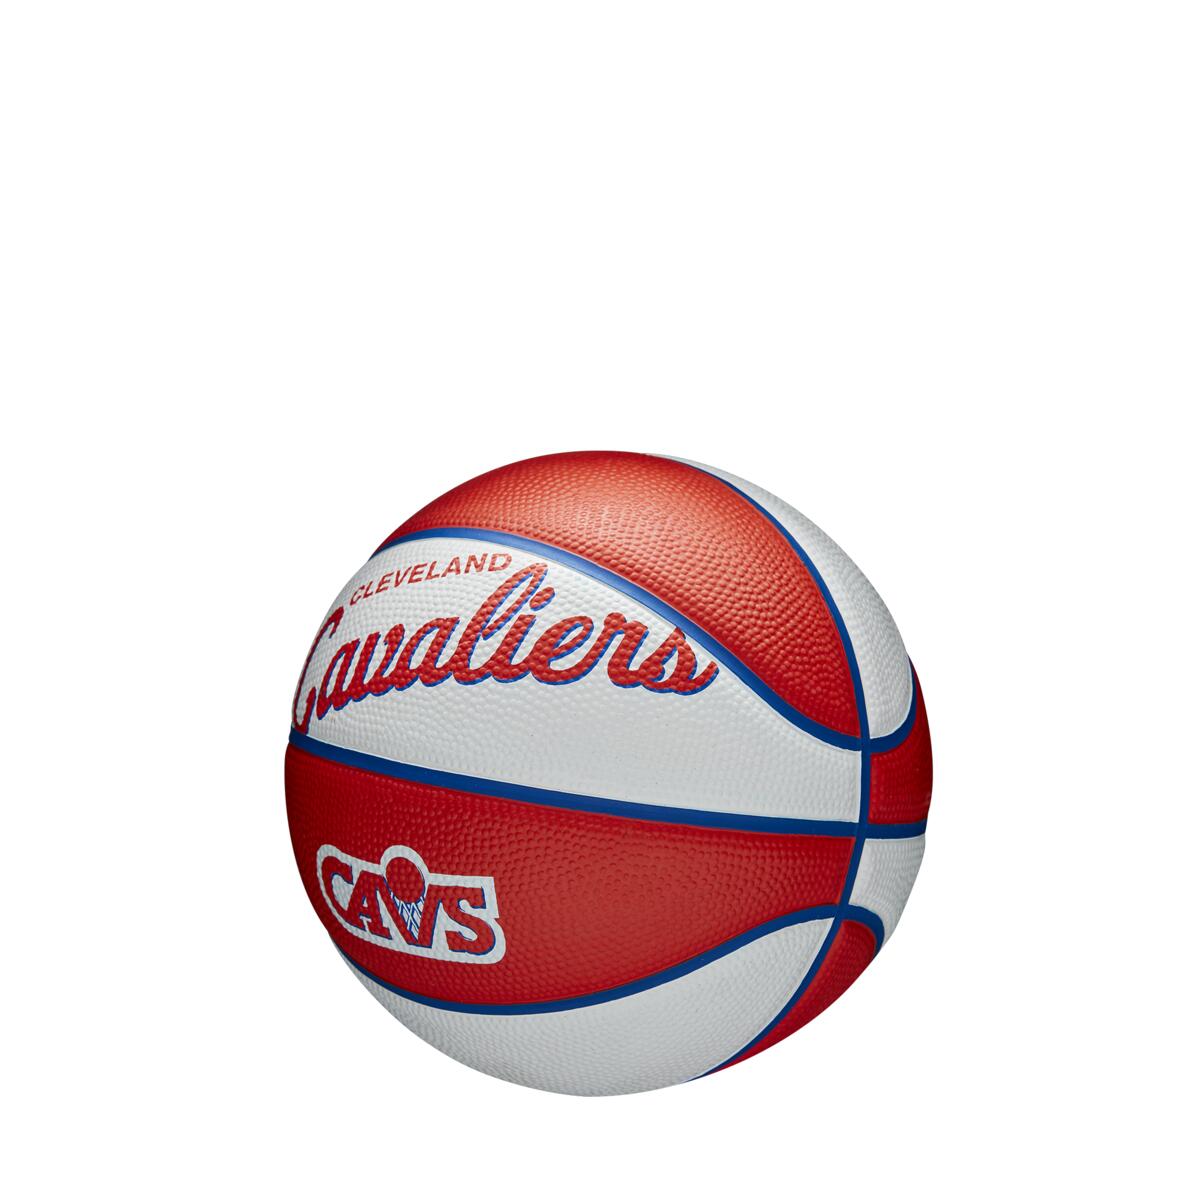 Ballons de basket NBA Retro Mini Cleveland Cavaliers